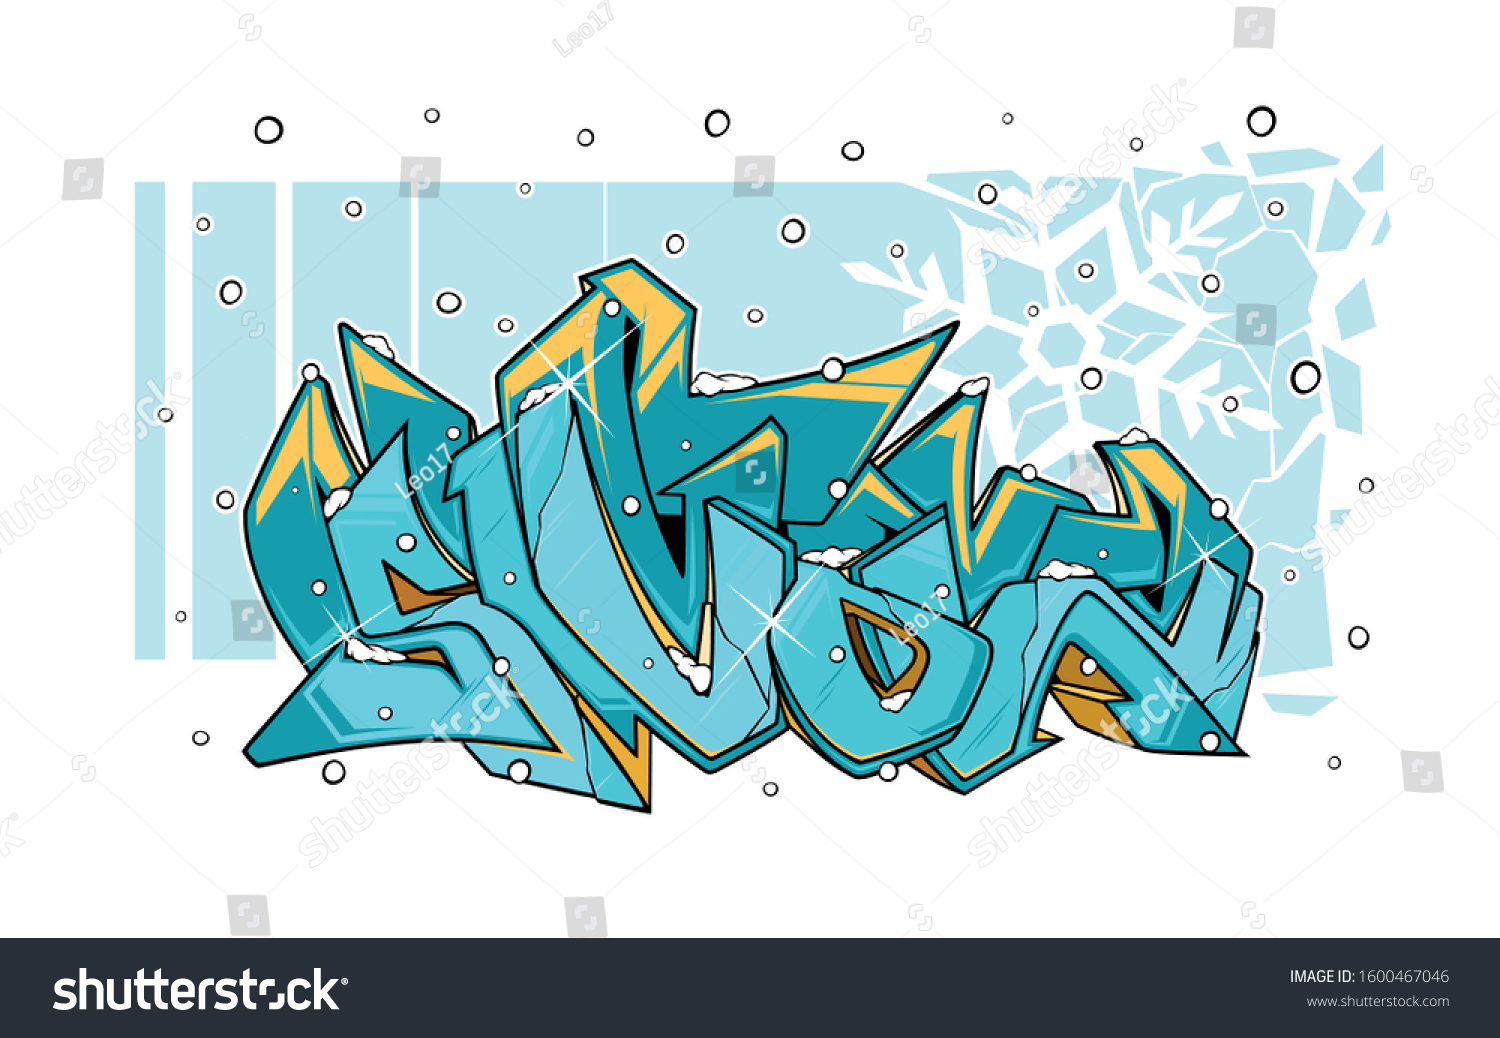 the word music in graffiti writing